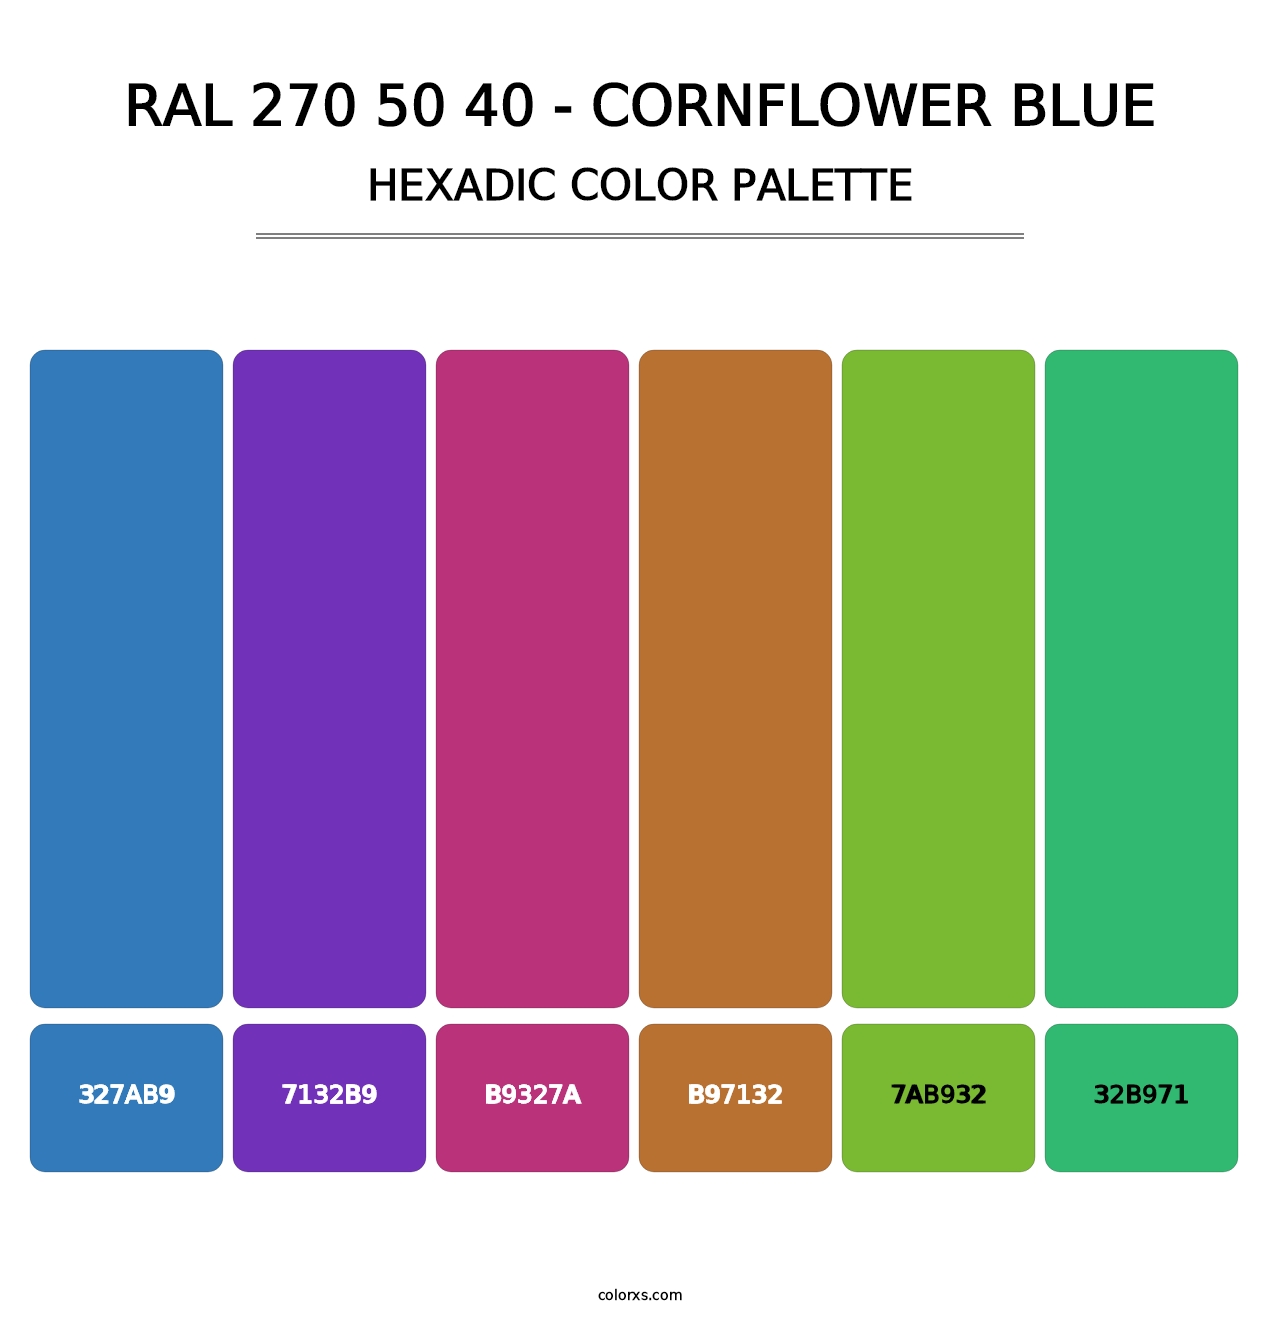 RAL 270 50 40 - Cornflower Blue - Hexadic Color Palette